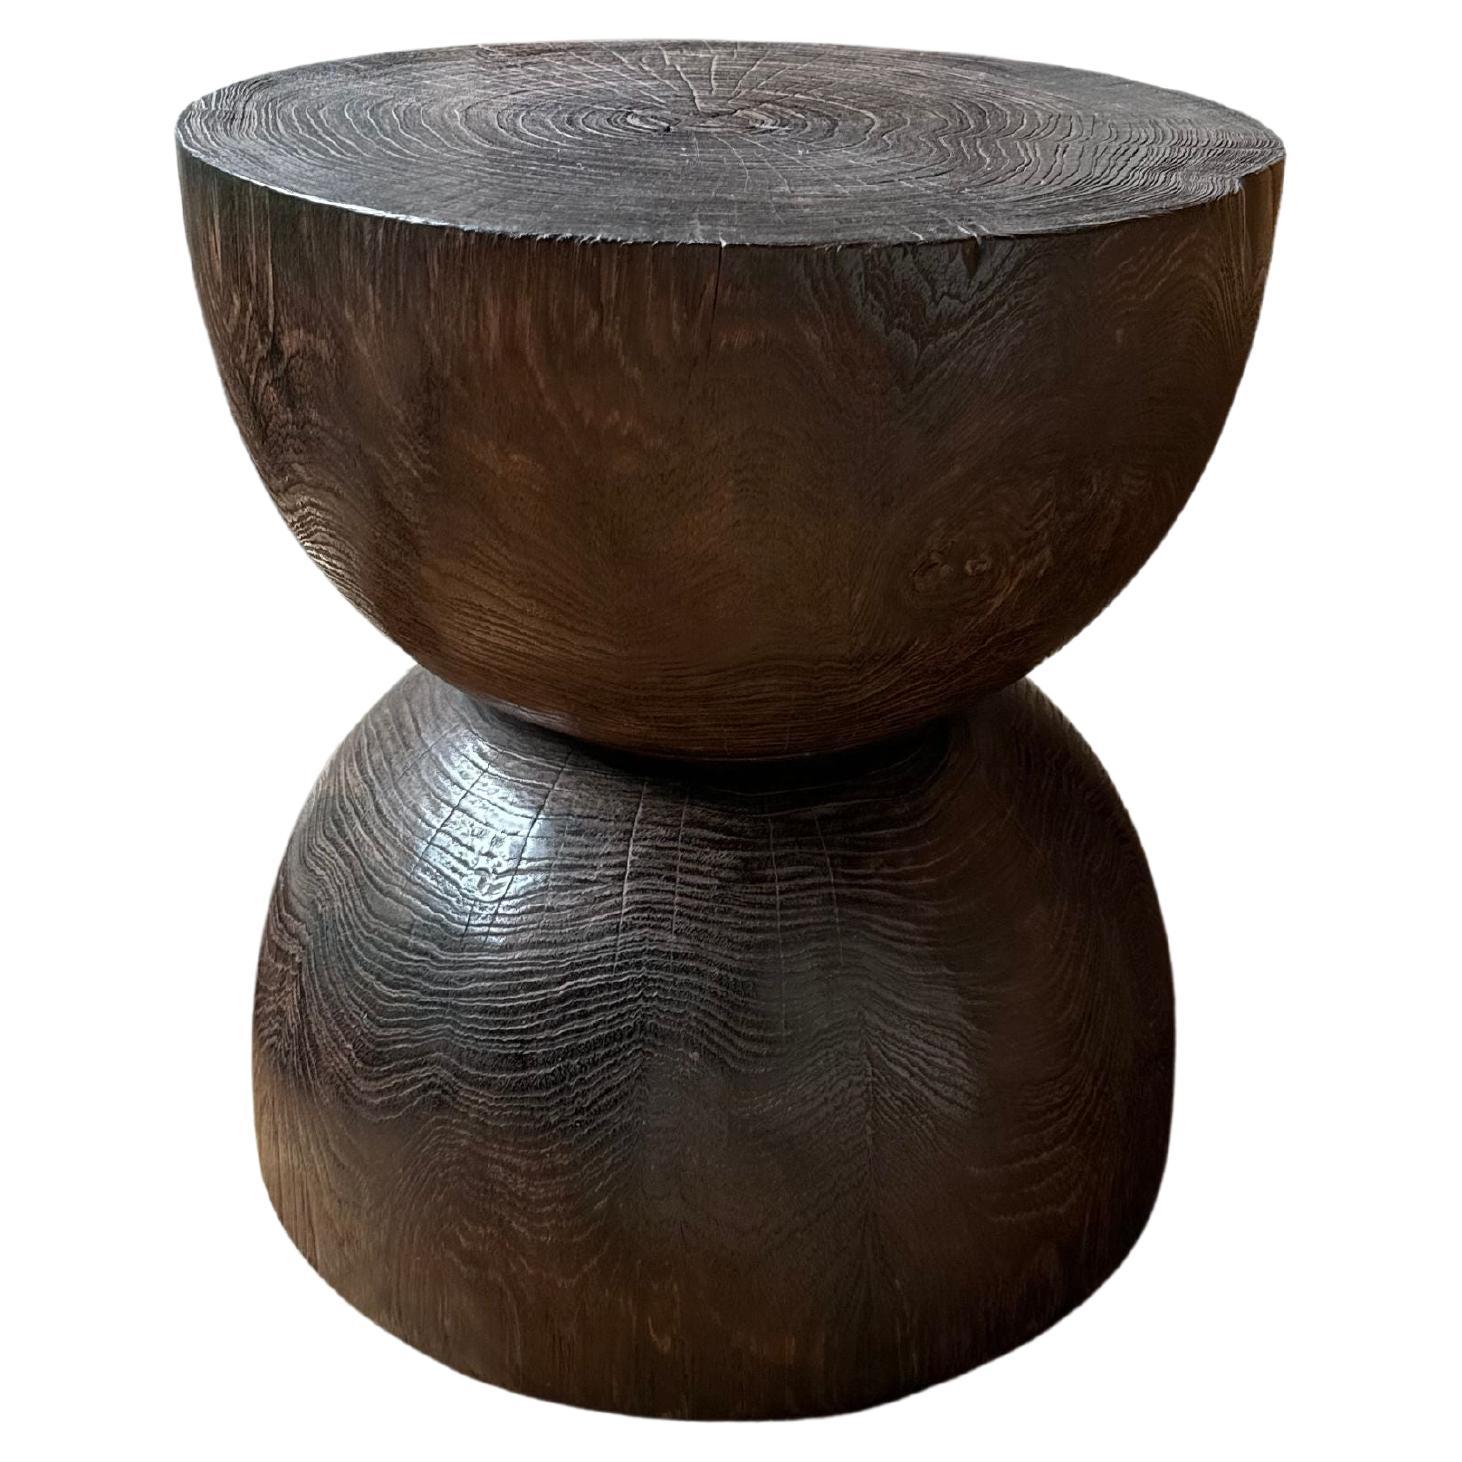 Round Teak Wood Side Table, Burnt Finish, Hour Glass Design, Modern Organic